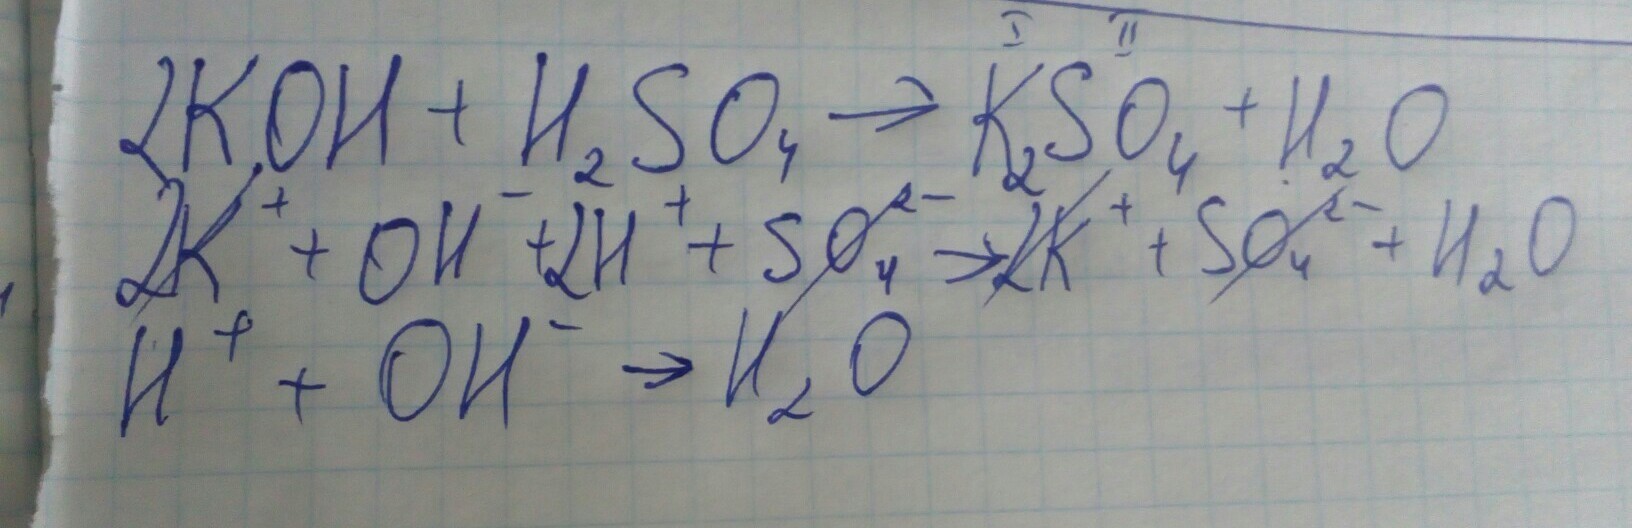 So2 и избыток р ра koh. Koh+h2so4 ионное. Koh+h2so4 ионное уравнение и молекулярное. Koh+h2so4 уравнение. Koh h2so4 ионное уравнение полное и сокращенное.